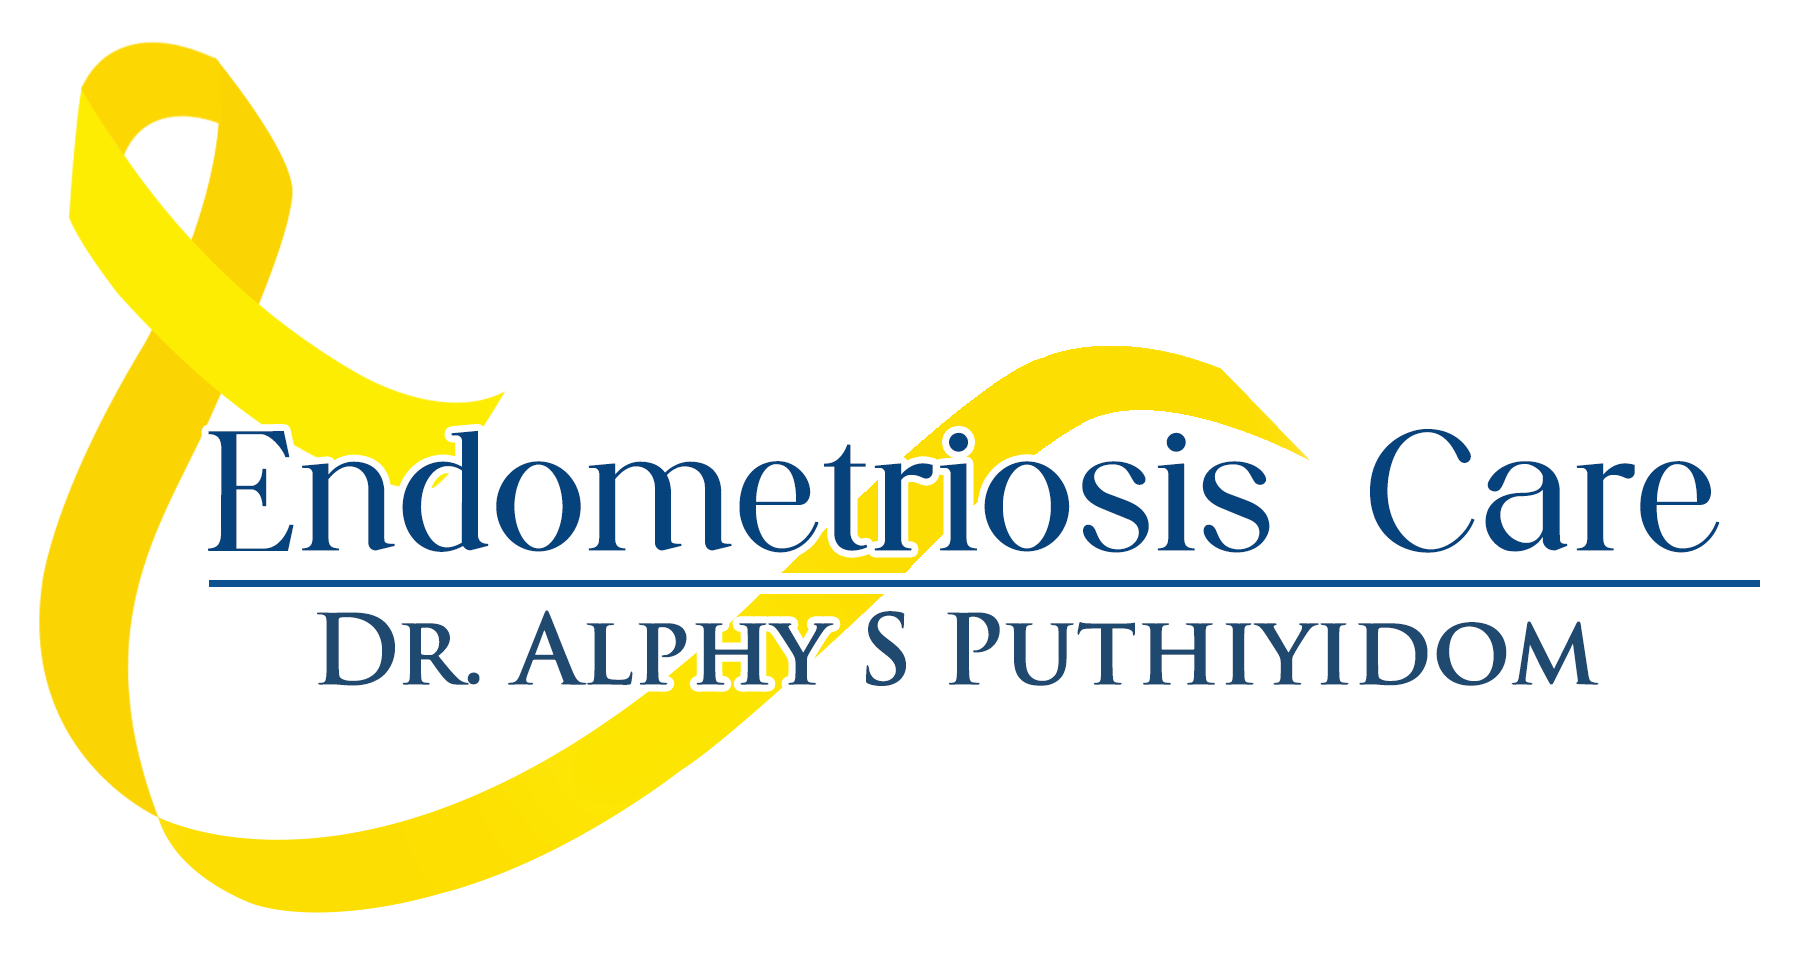 Best Endometriosis Treatment In Dubai